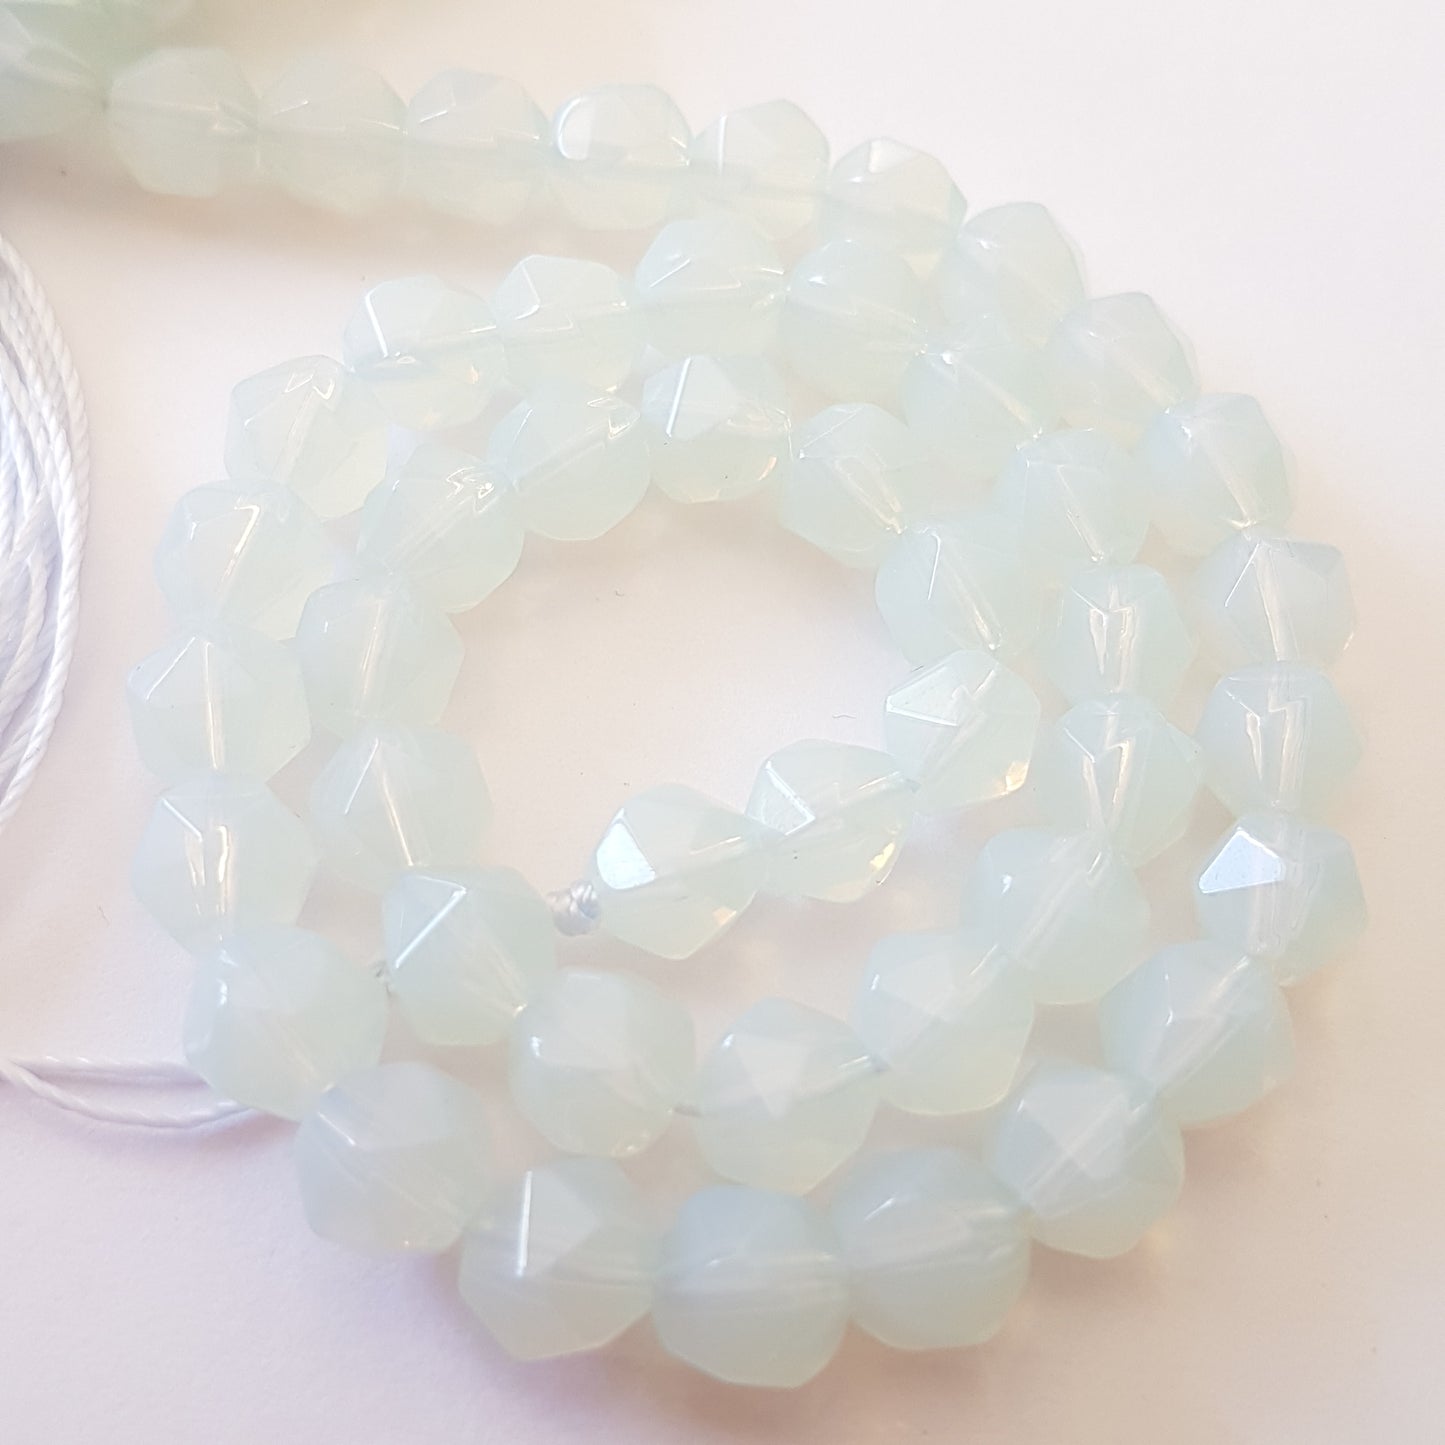 Strand of 8mm Opalite Beads